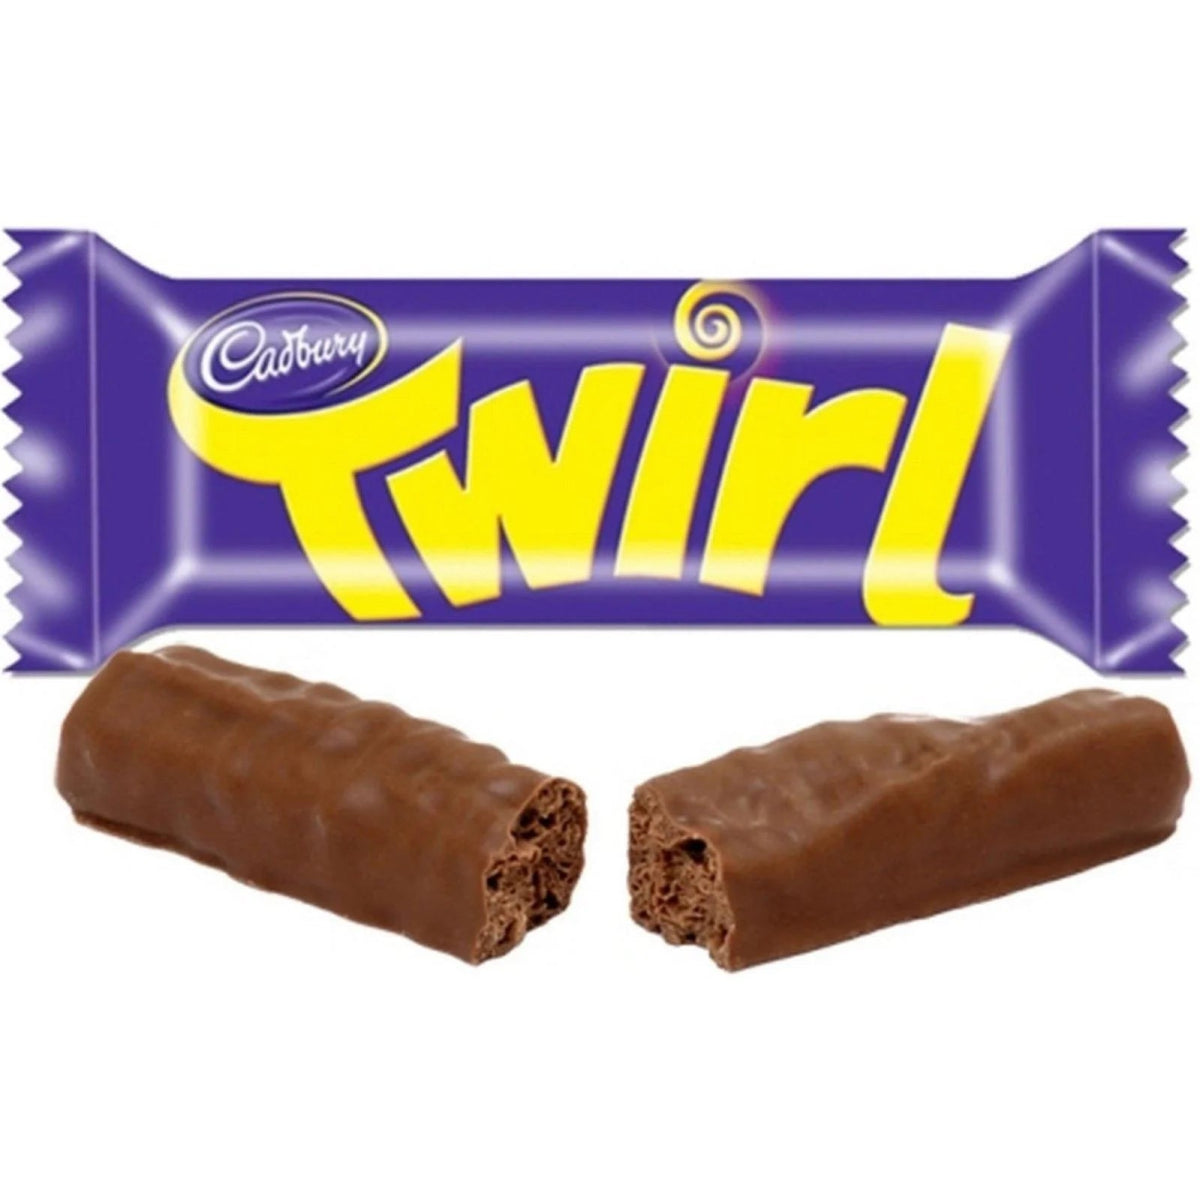 Cadbury's Twirl Chocolate Bar 43g - Candy Mail UK